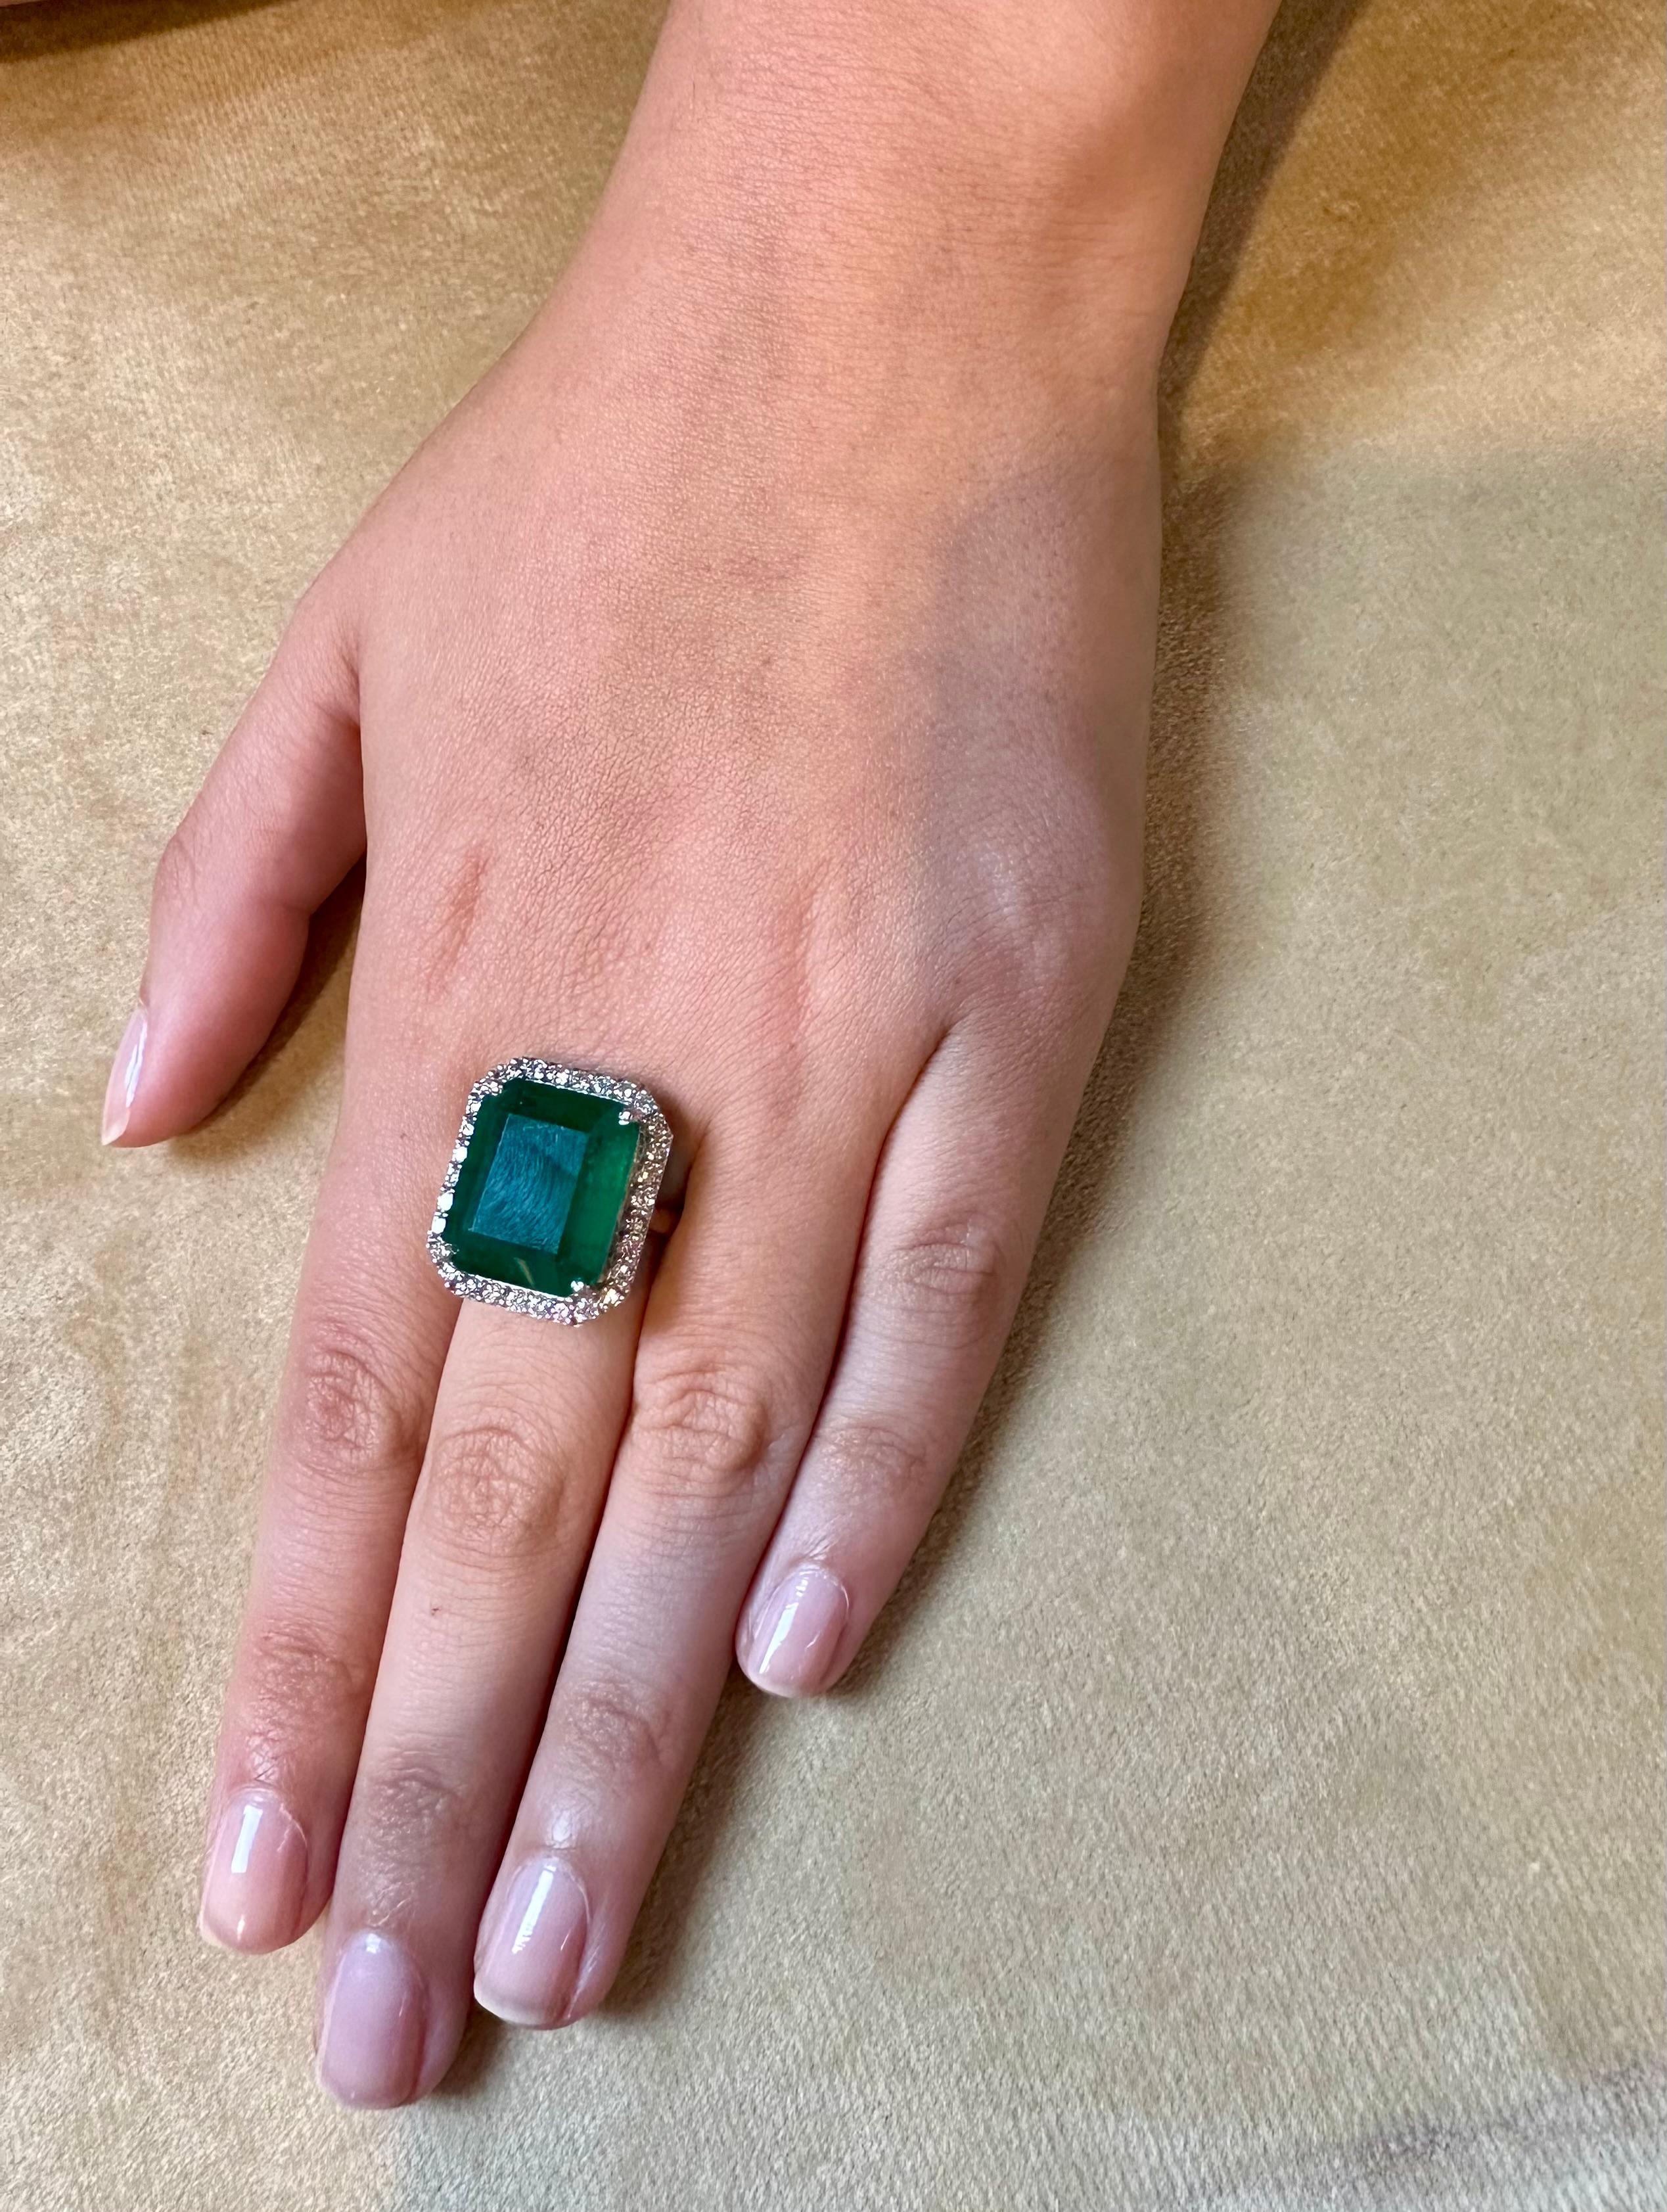 Natural 13 Carat Emerald Cut Zambian Emerald & Diamond Ring in 14kt White Gold For Sale 10